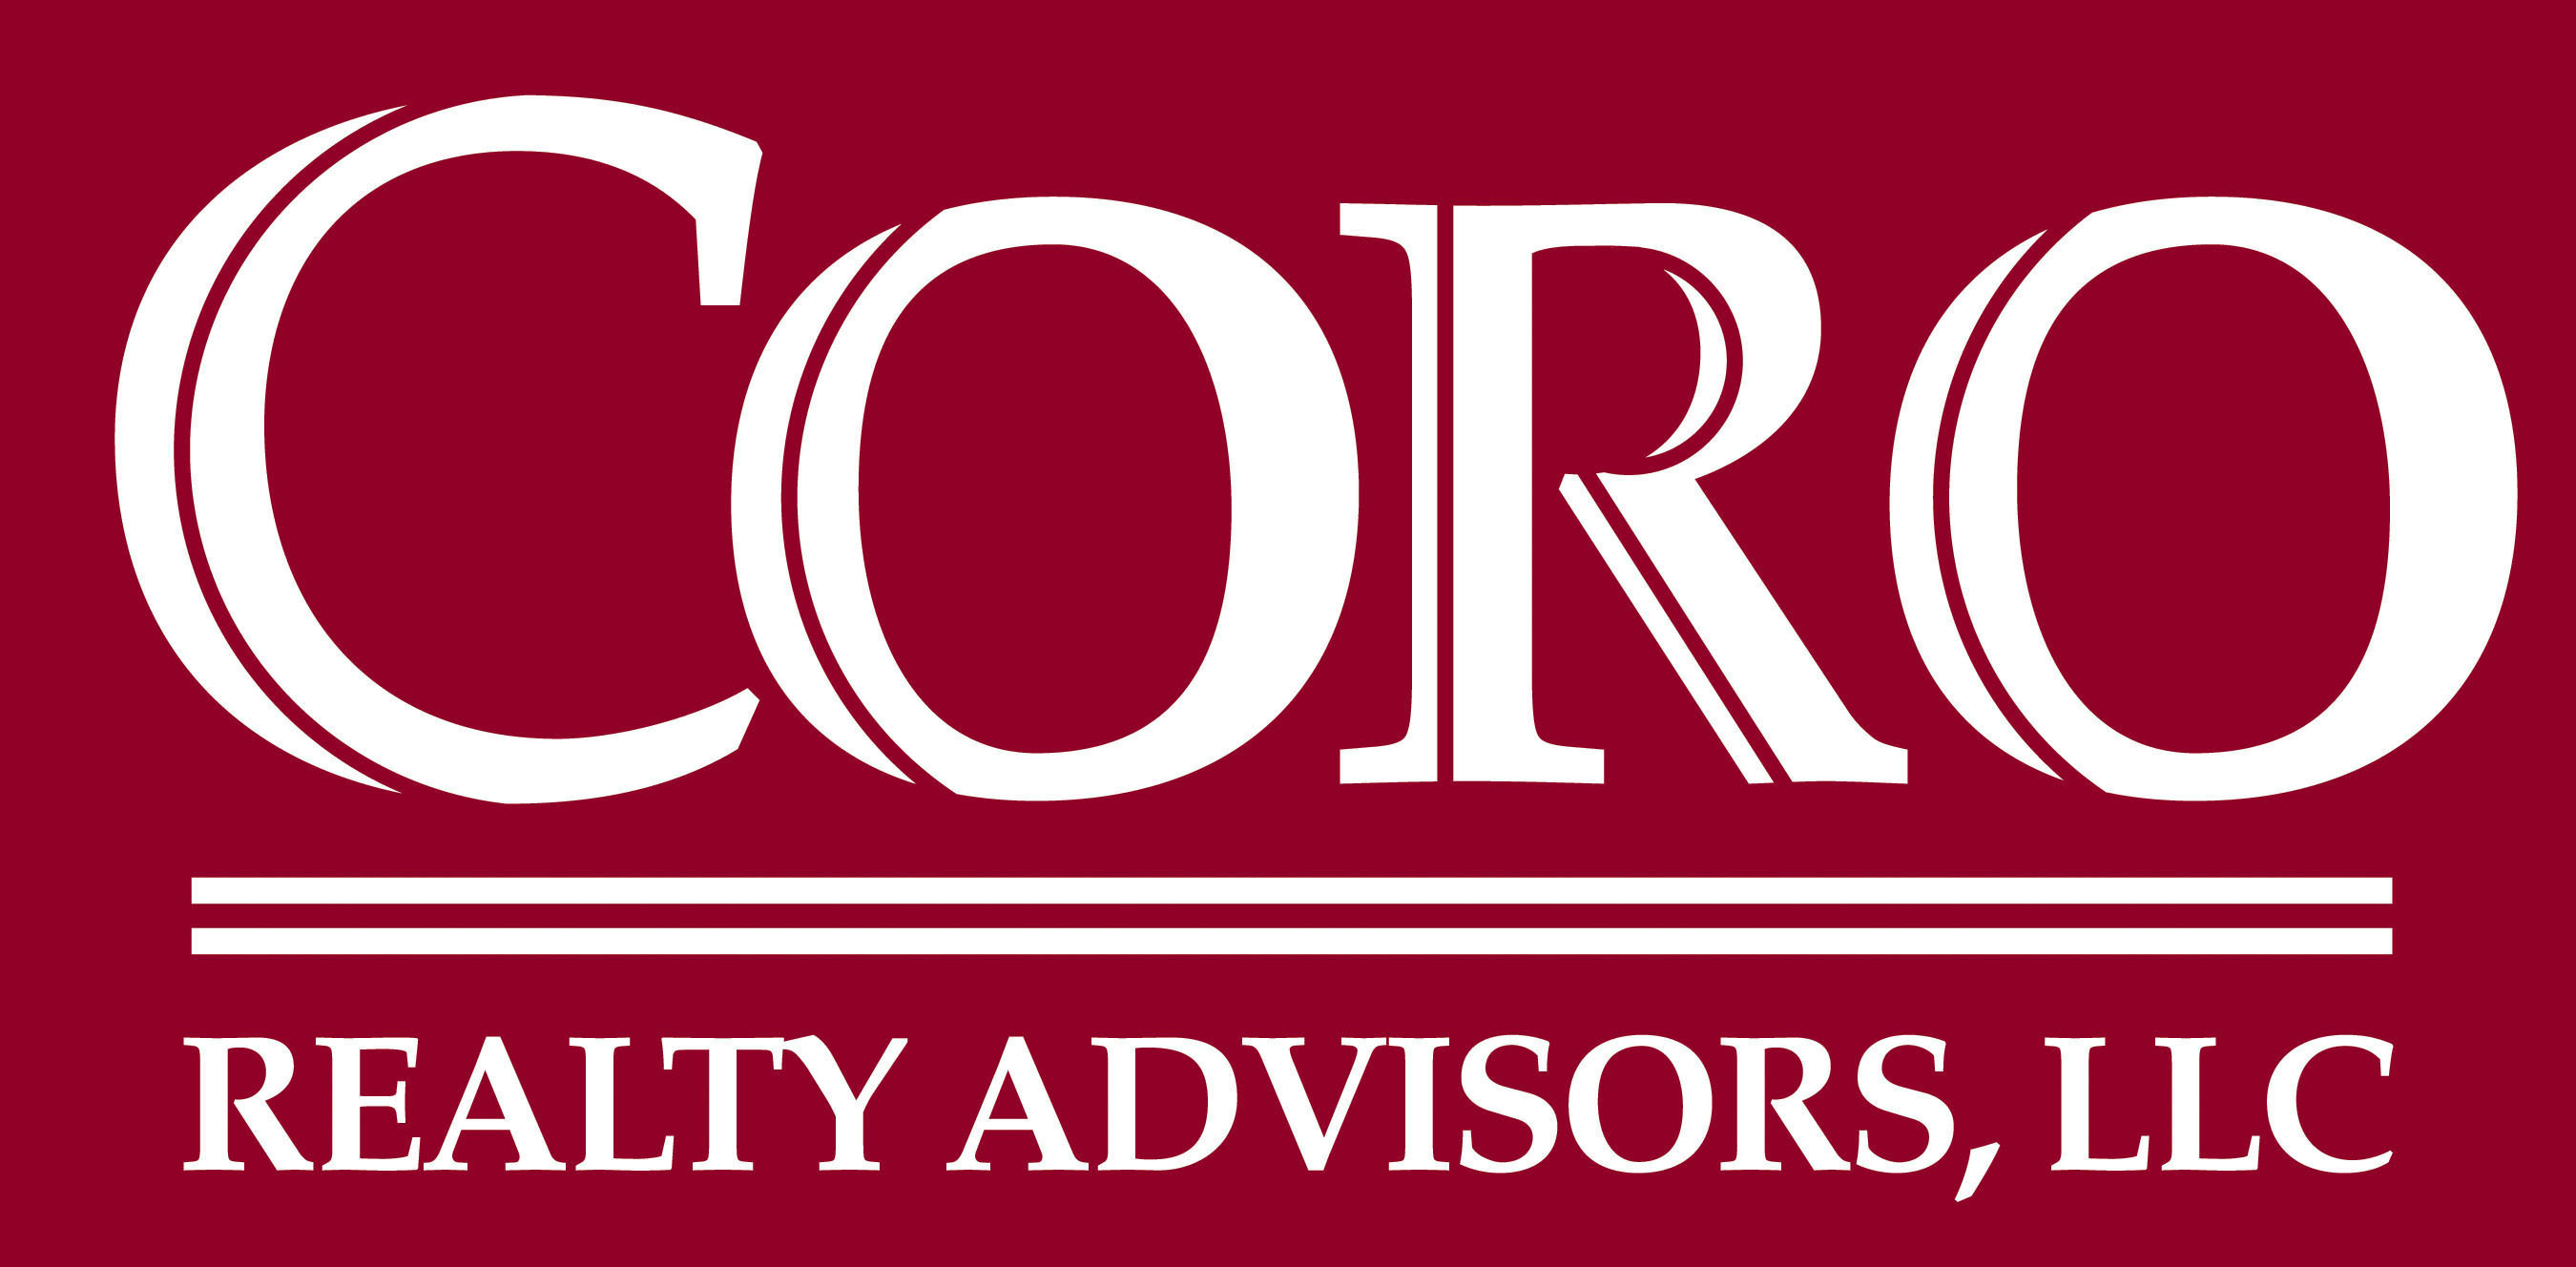 Coro Realty Logo. (PRNewsFoto/Coro Realty Advisors, LLC) (PRNewsFoto/CORO REALTY ADVISORS, LLC)